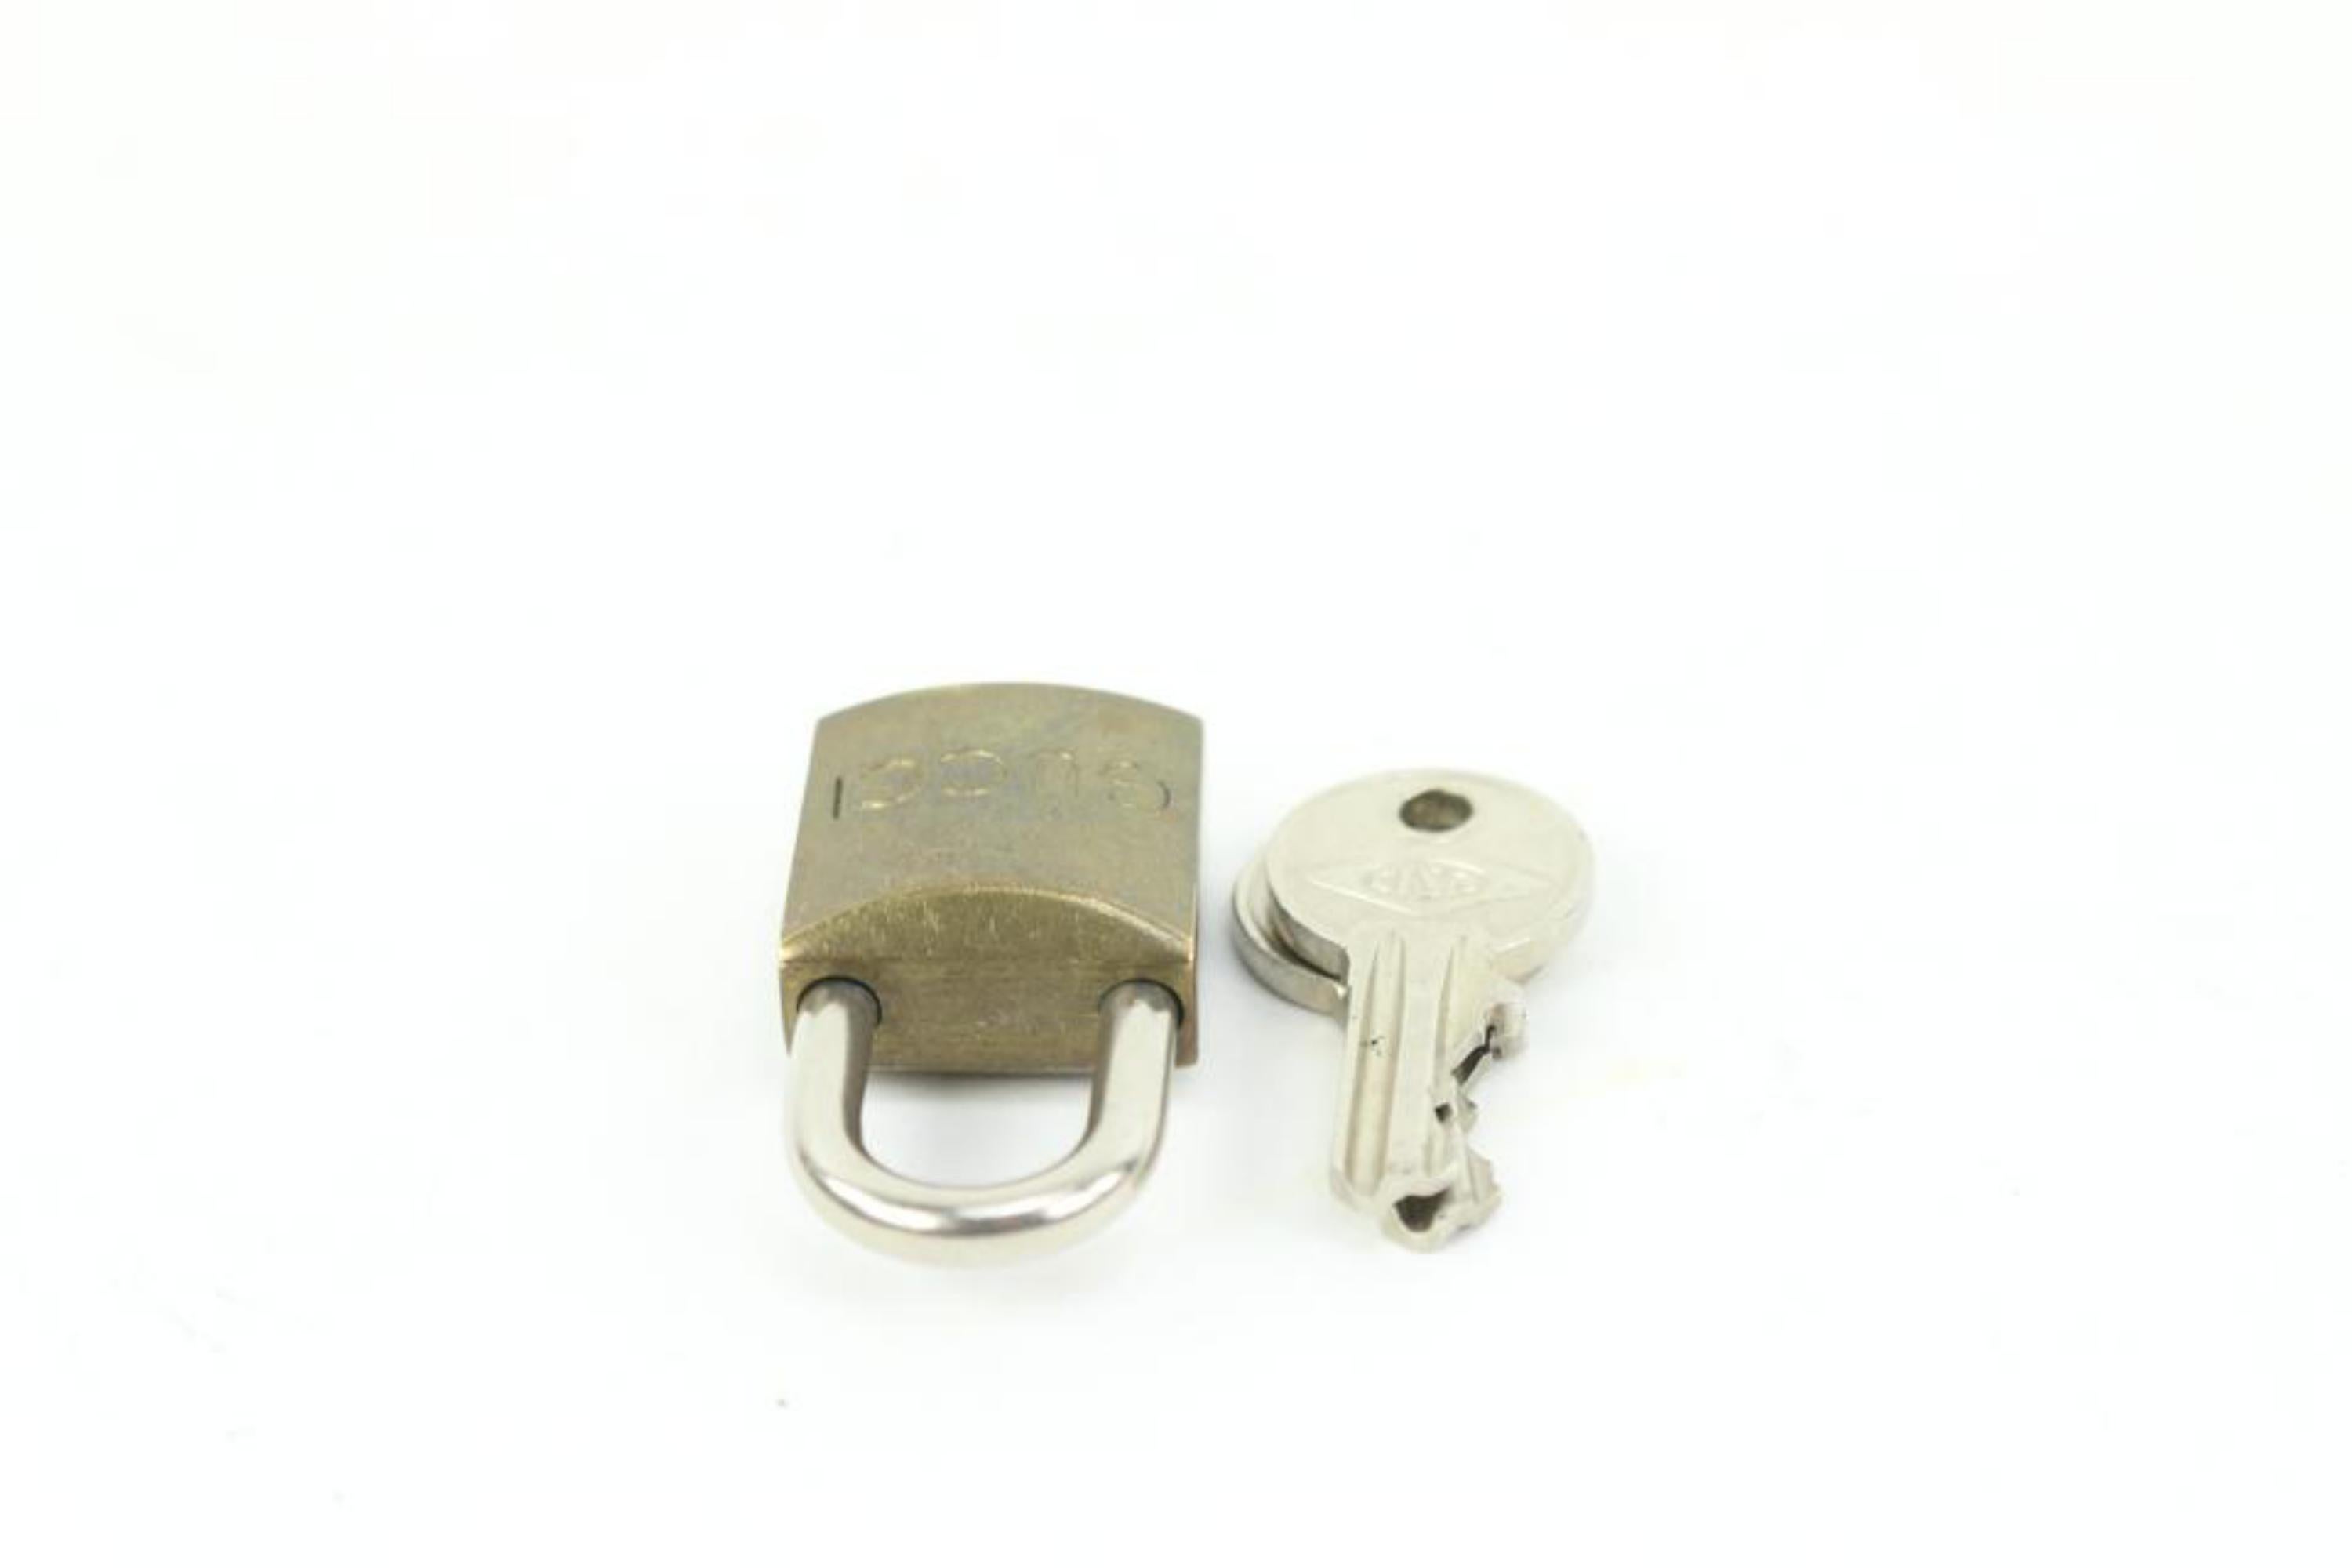 Gucci Brace G Logo Lock and Key Set Cadena Bag Charm Padlock 69g315s 3